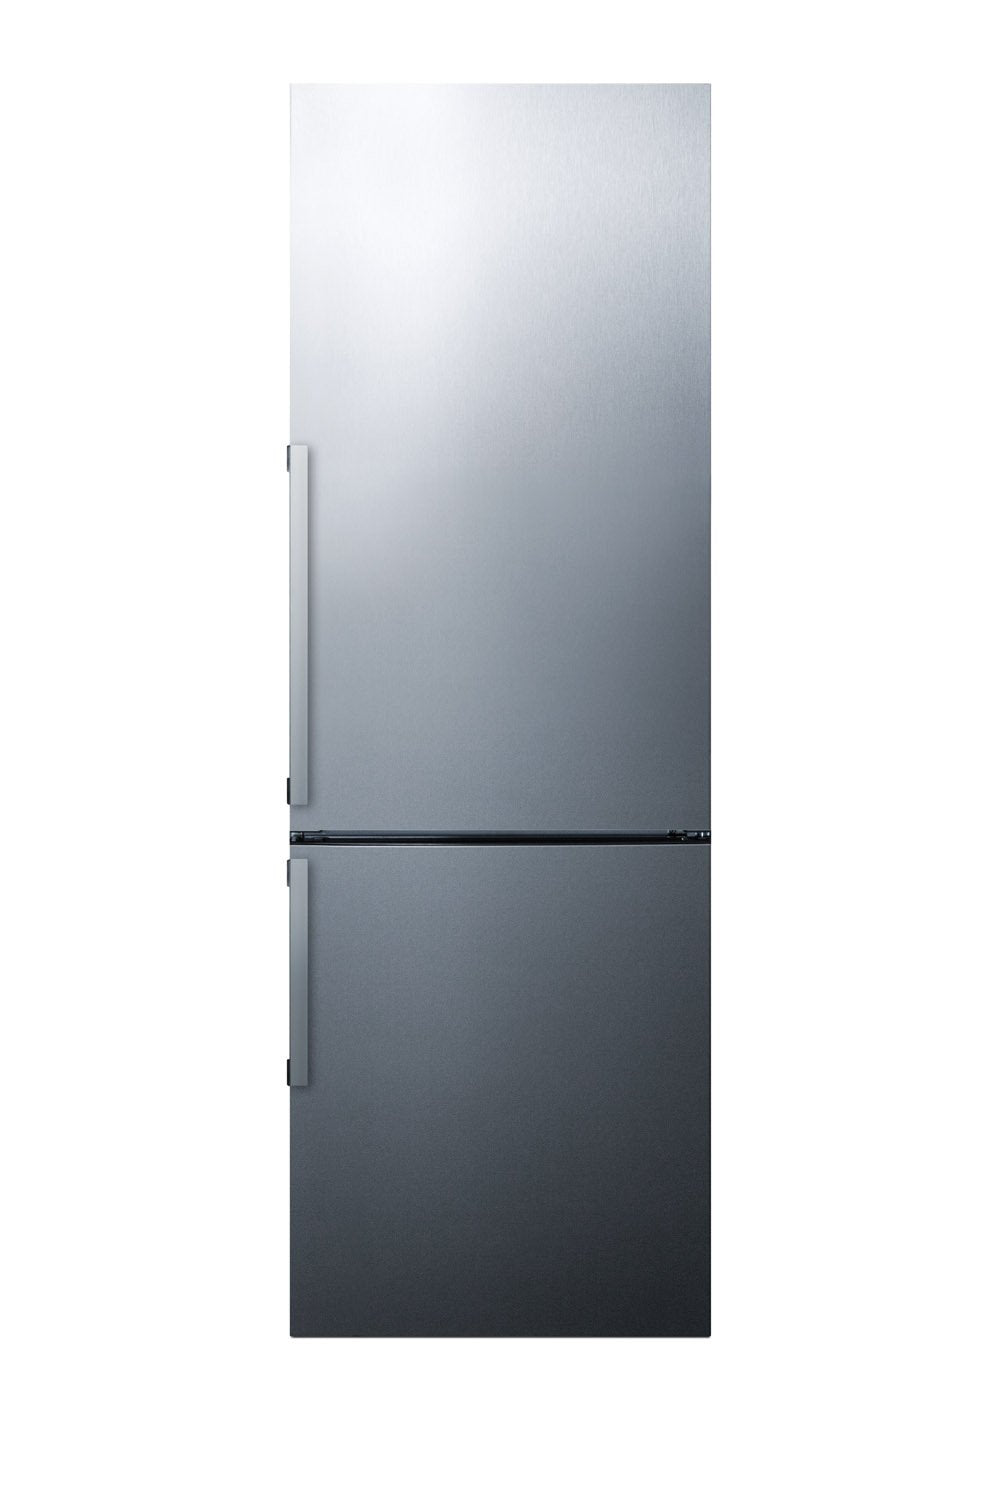 SUMMIT 24 in. Counter-Depth Bottom Freezer Refrigerator in Stainless Steel (FFBF246SS)